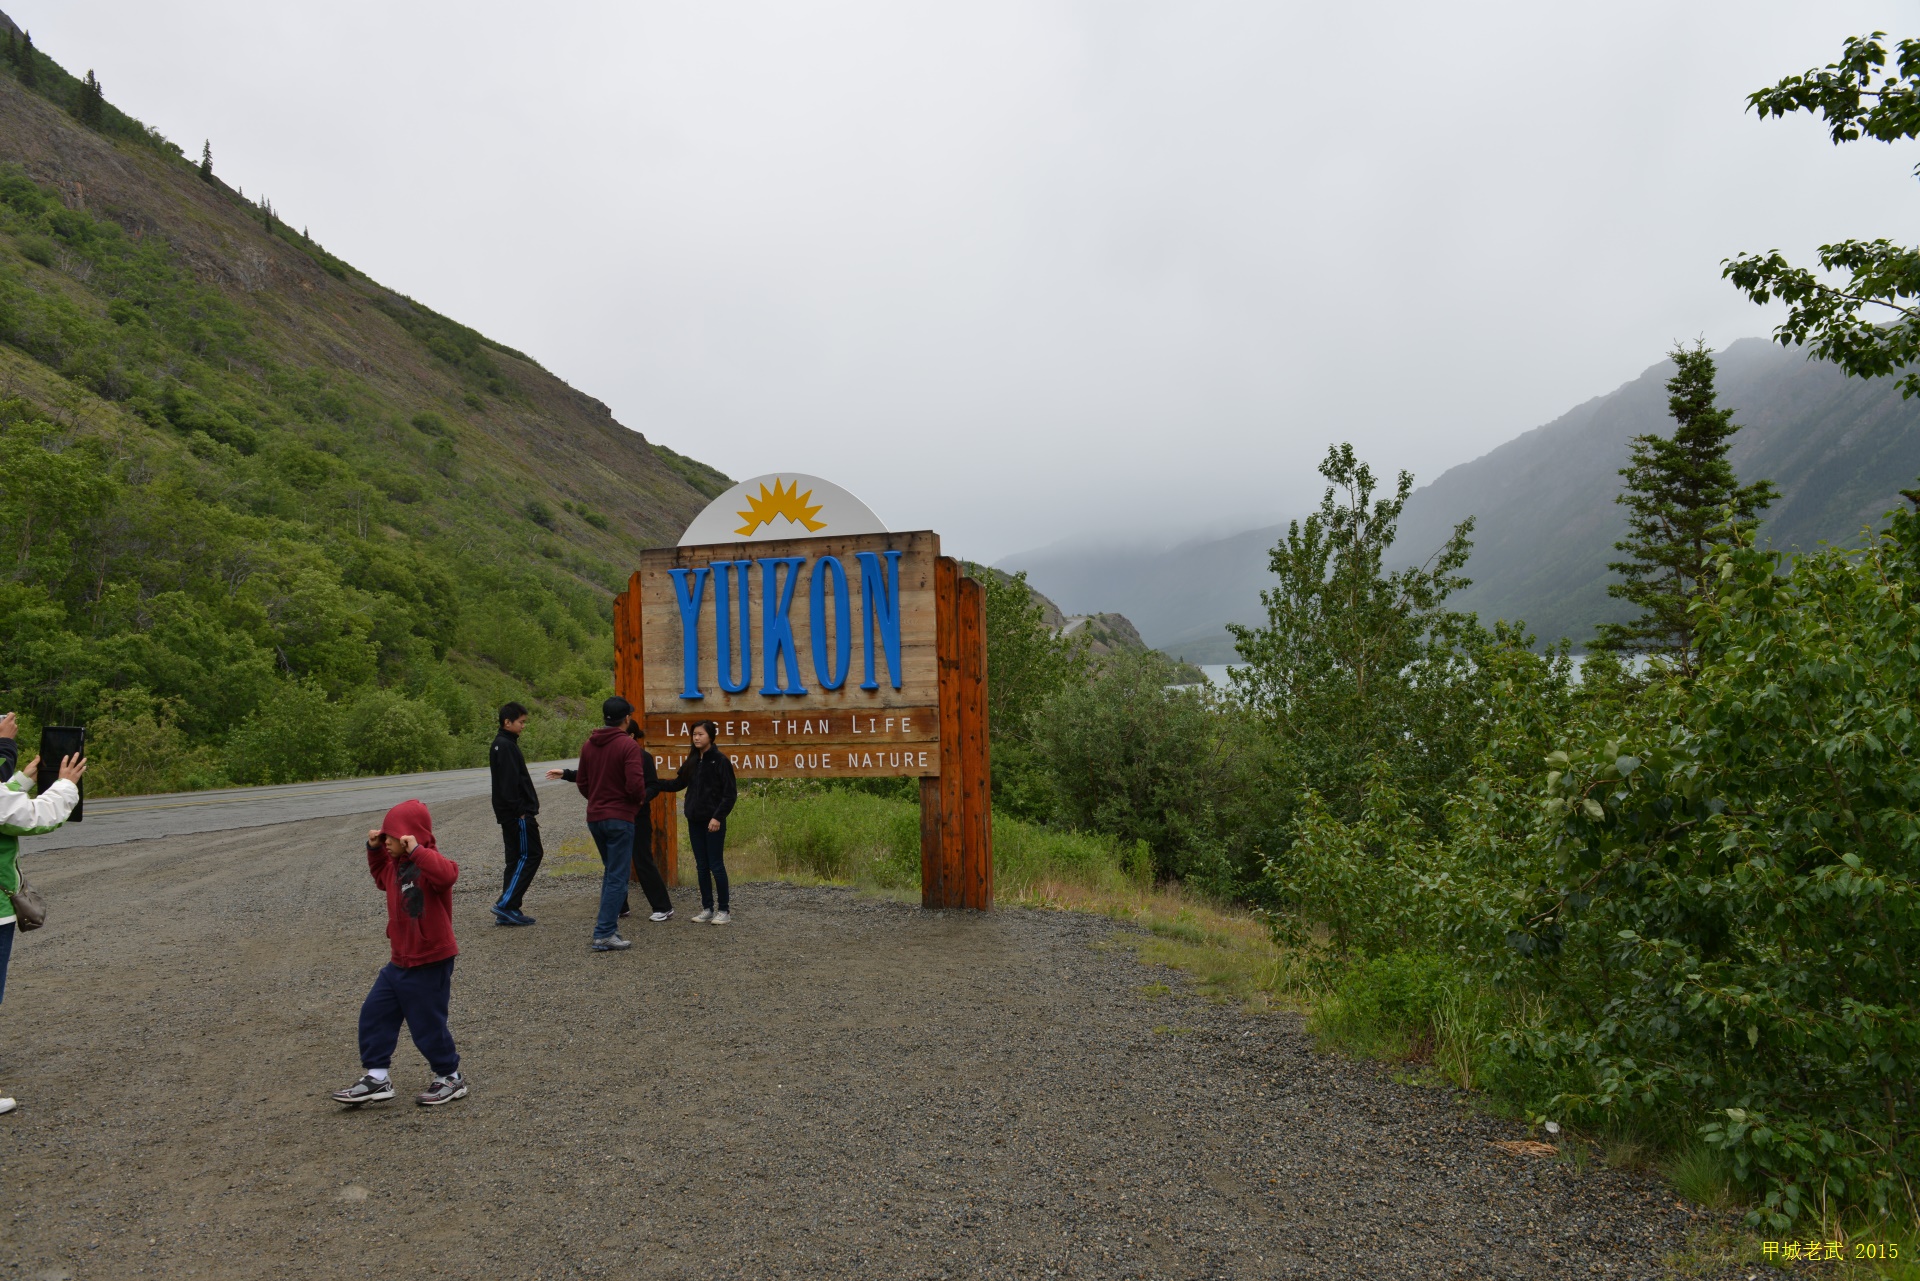 Alaska Travel route